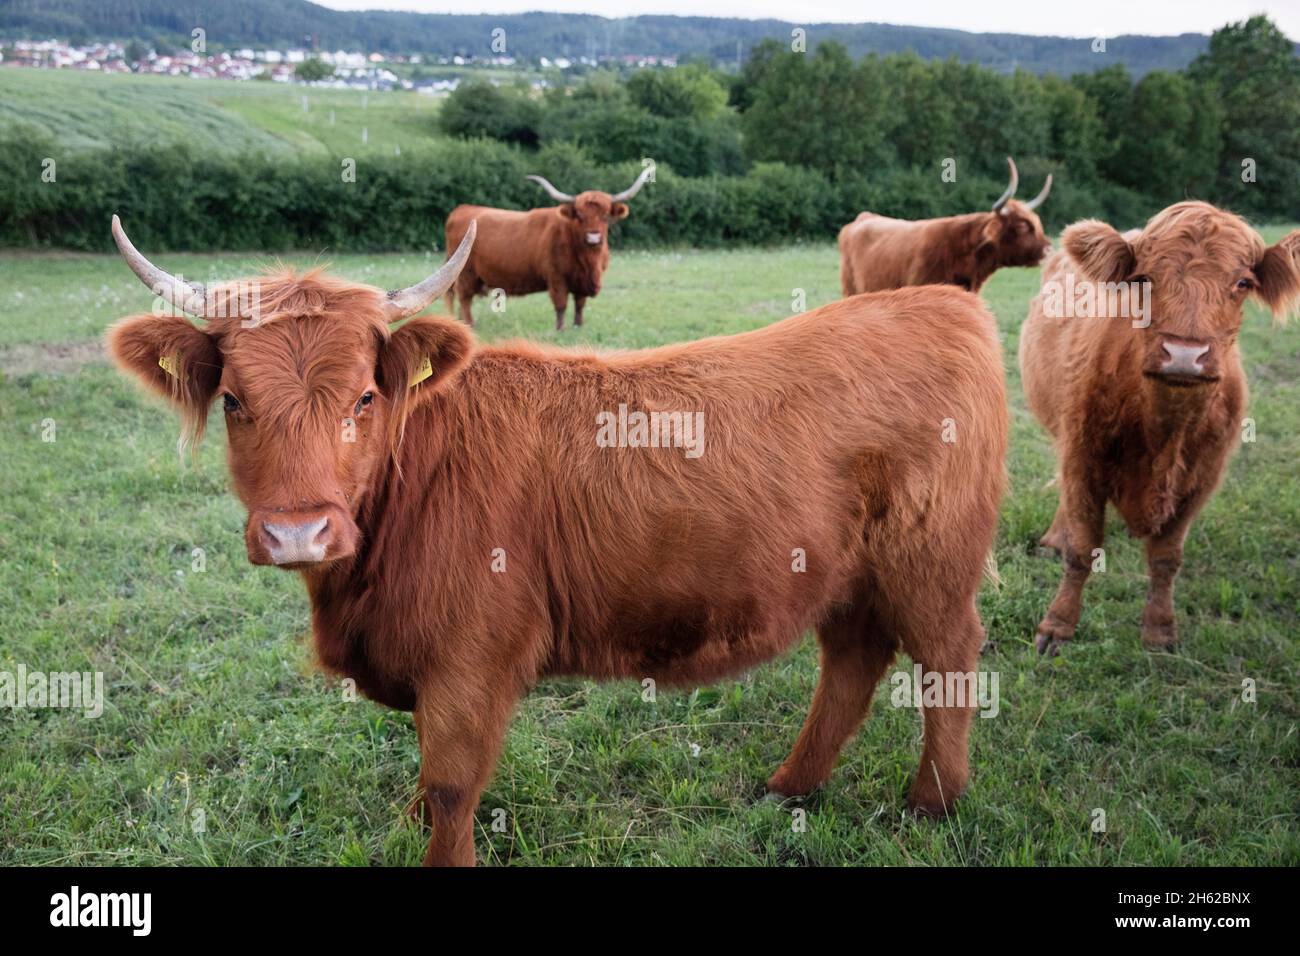 Kuh, Kühe, schottisches Hochlandrind, zotteliges Fell, lange Hörner, Herde, Hochlandrinder Stockfoto